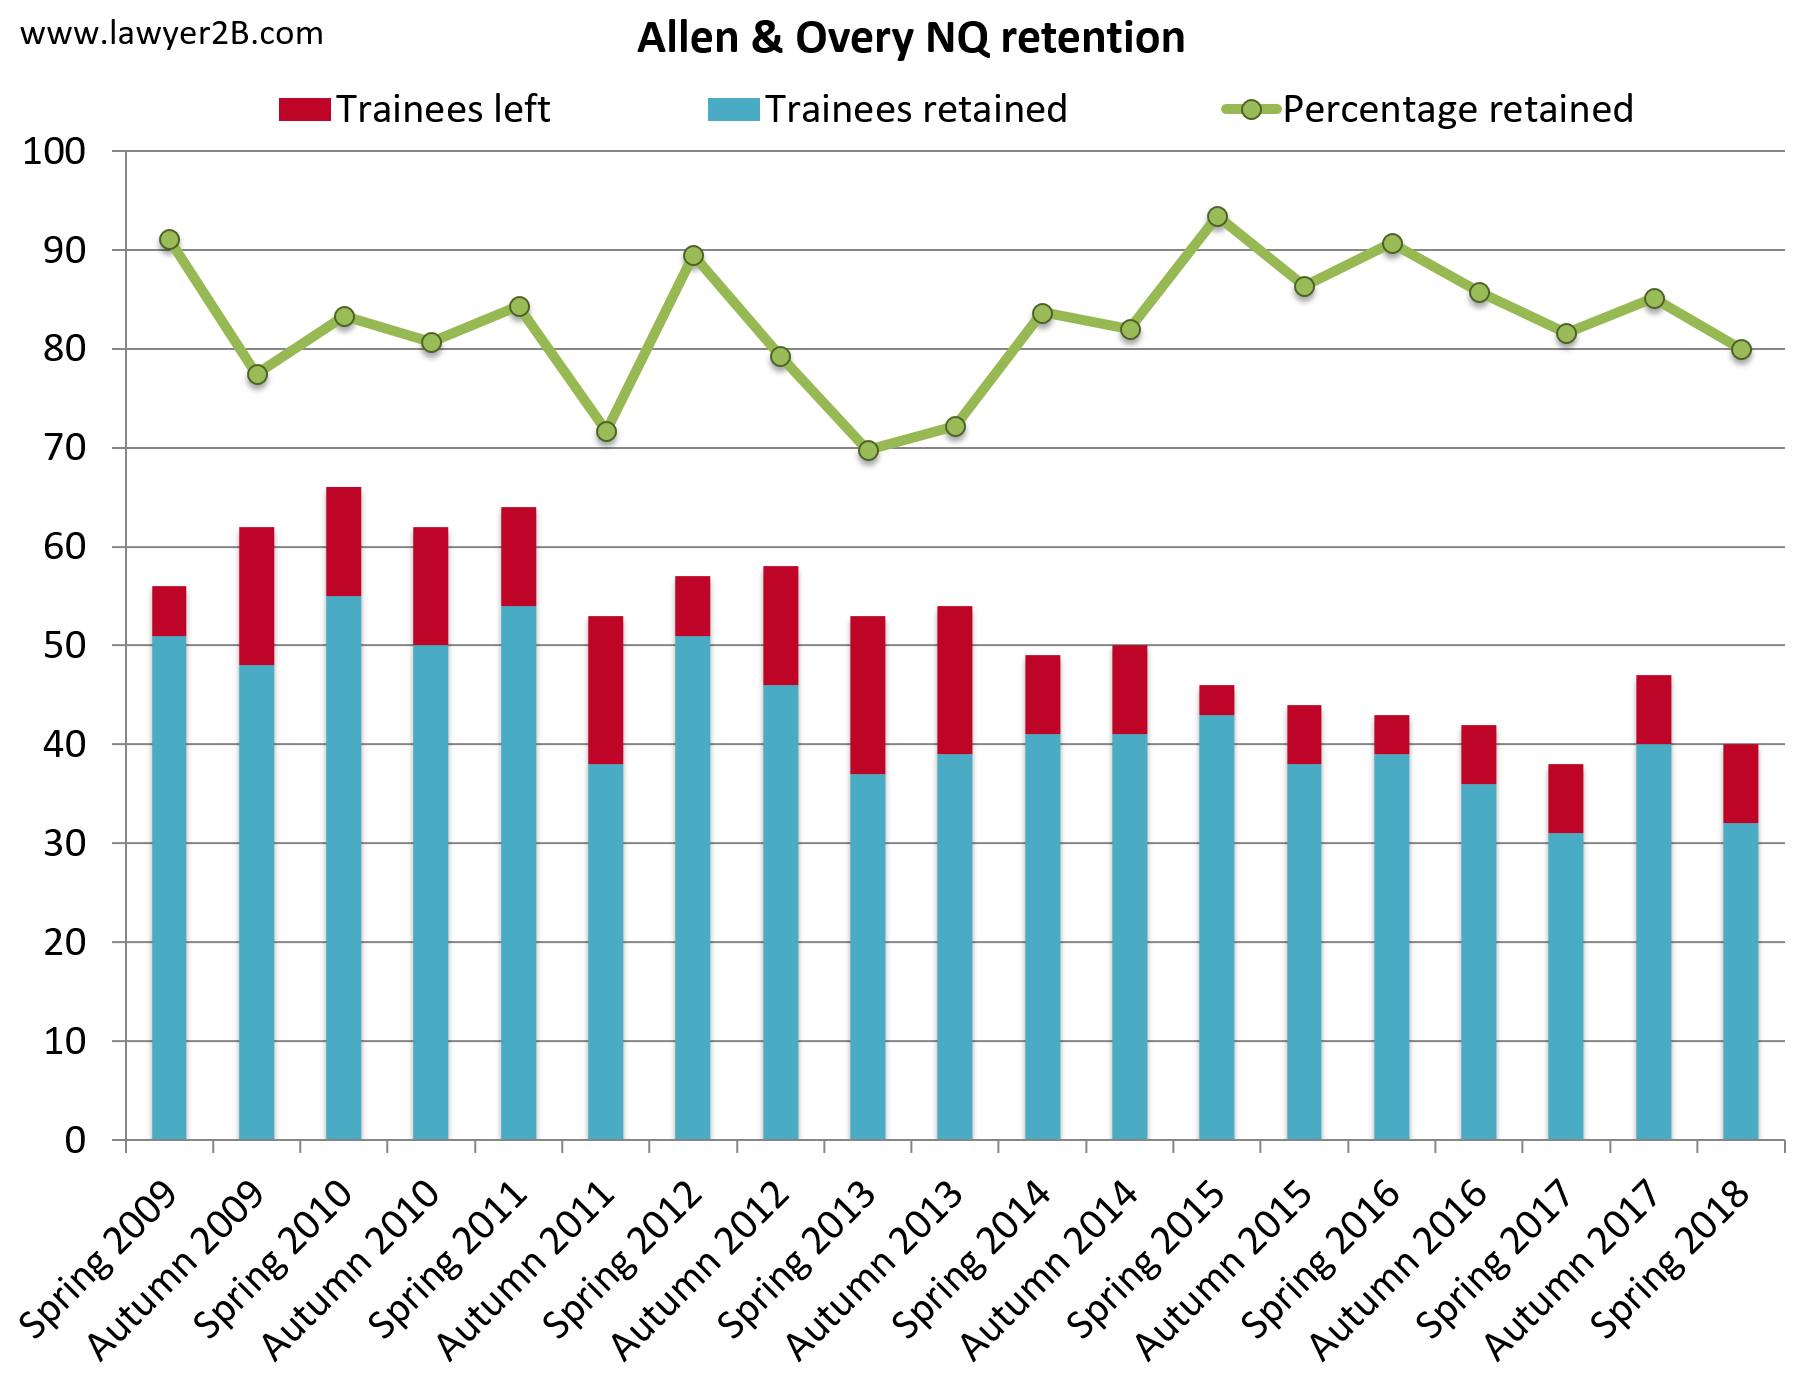 Allen & Overy retention